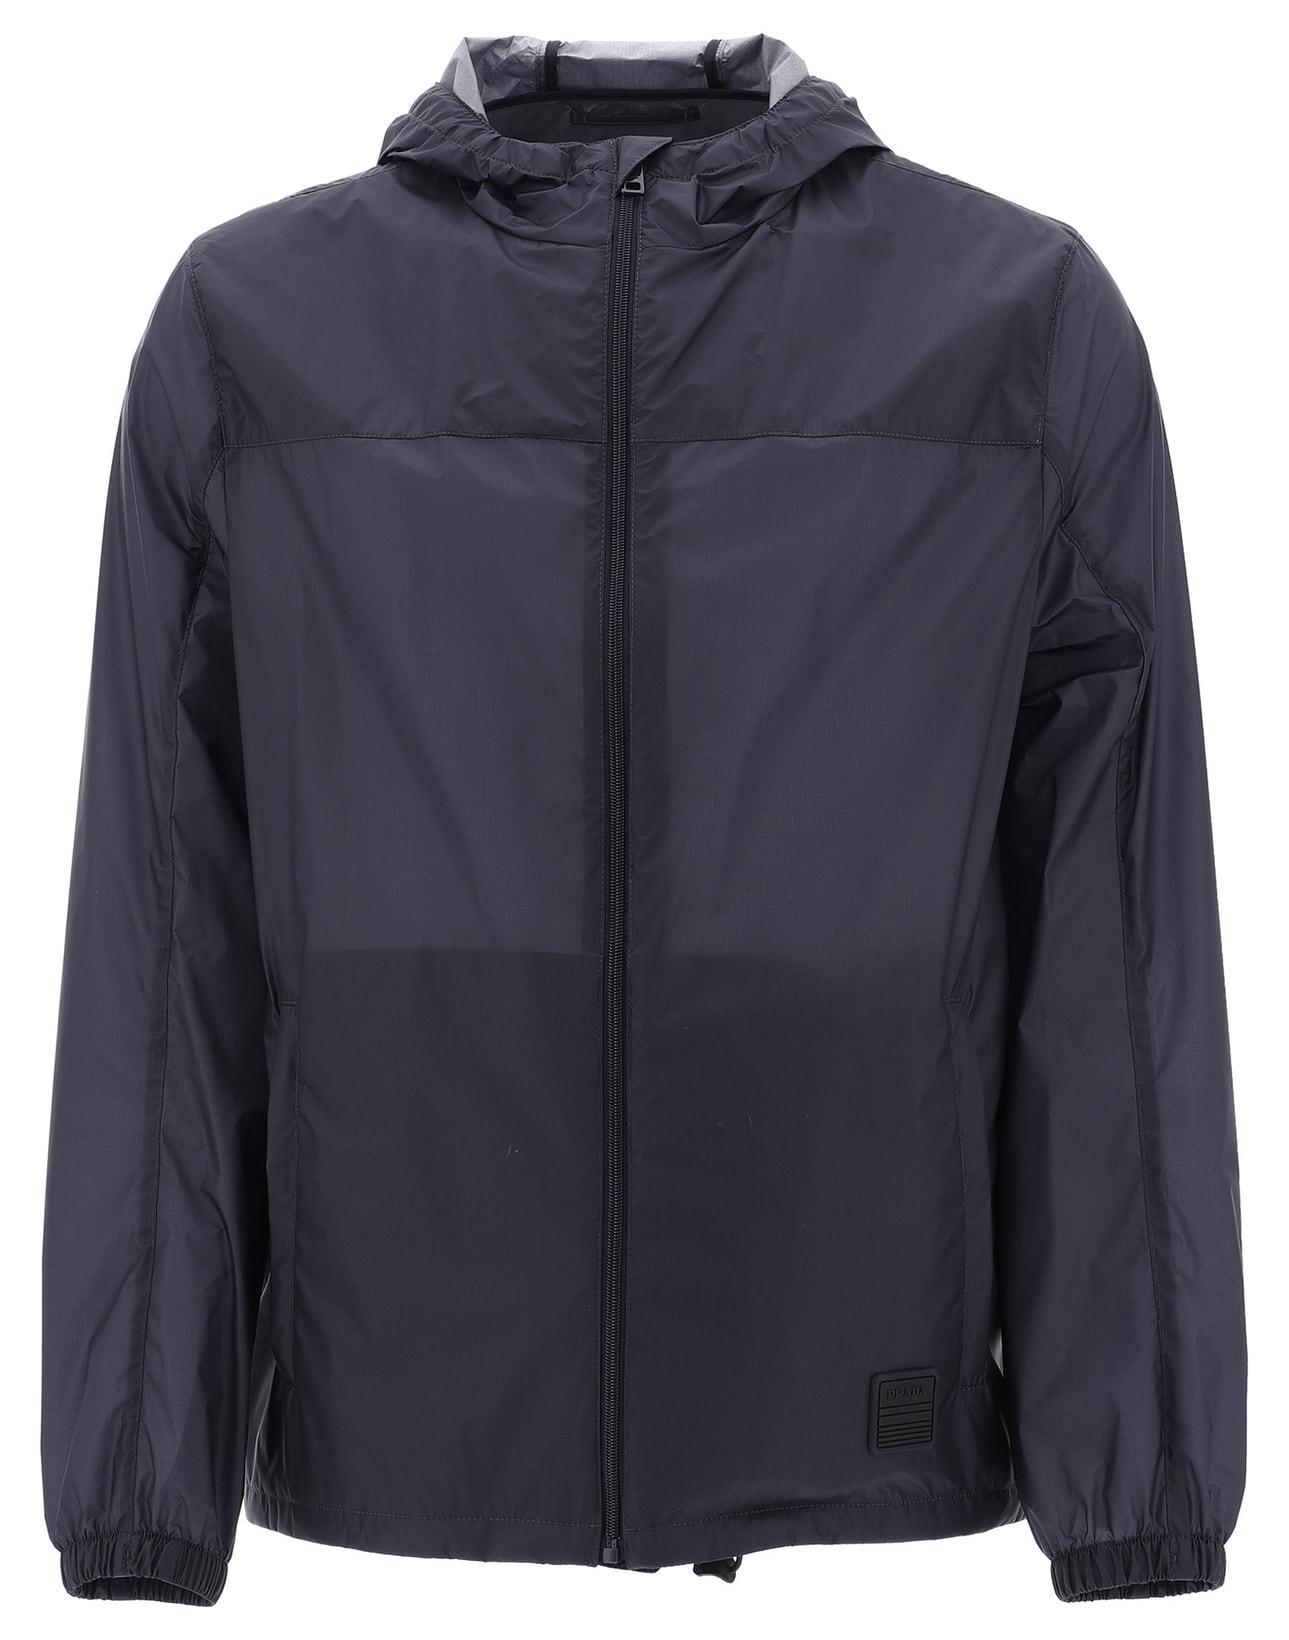 Prada Synthetic Zip-front Hooded Jacket in Navy (Blue) for Men - Lyst